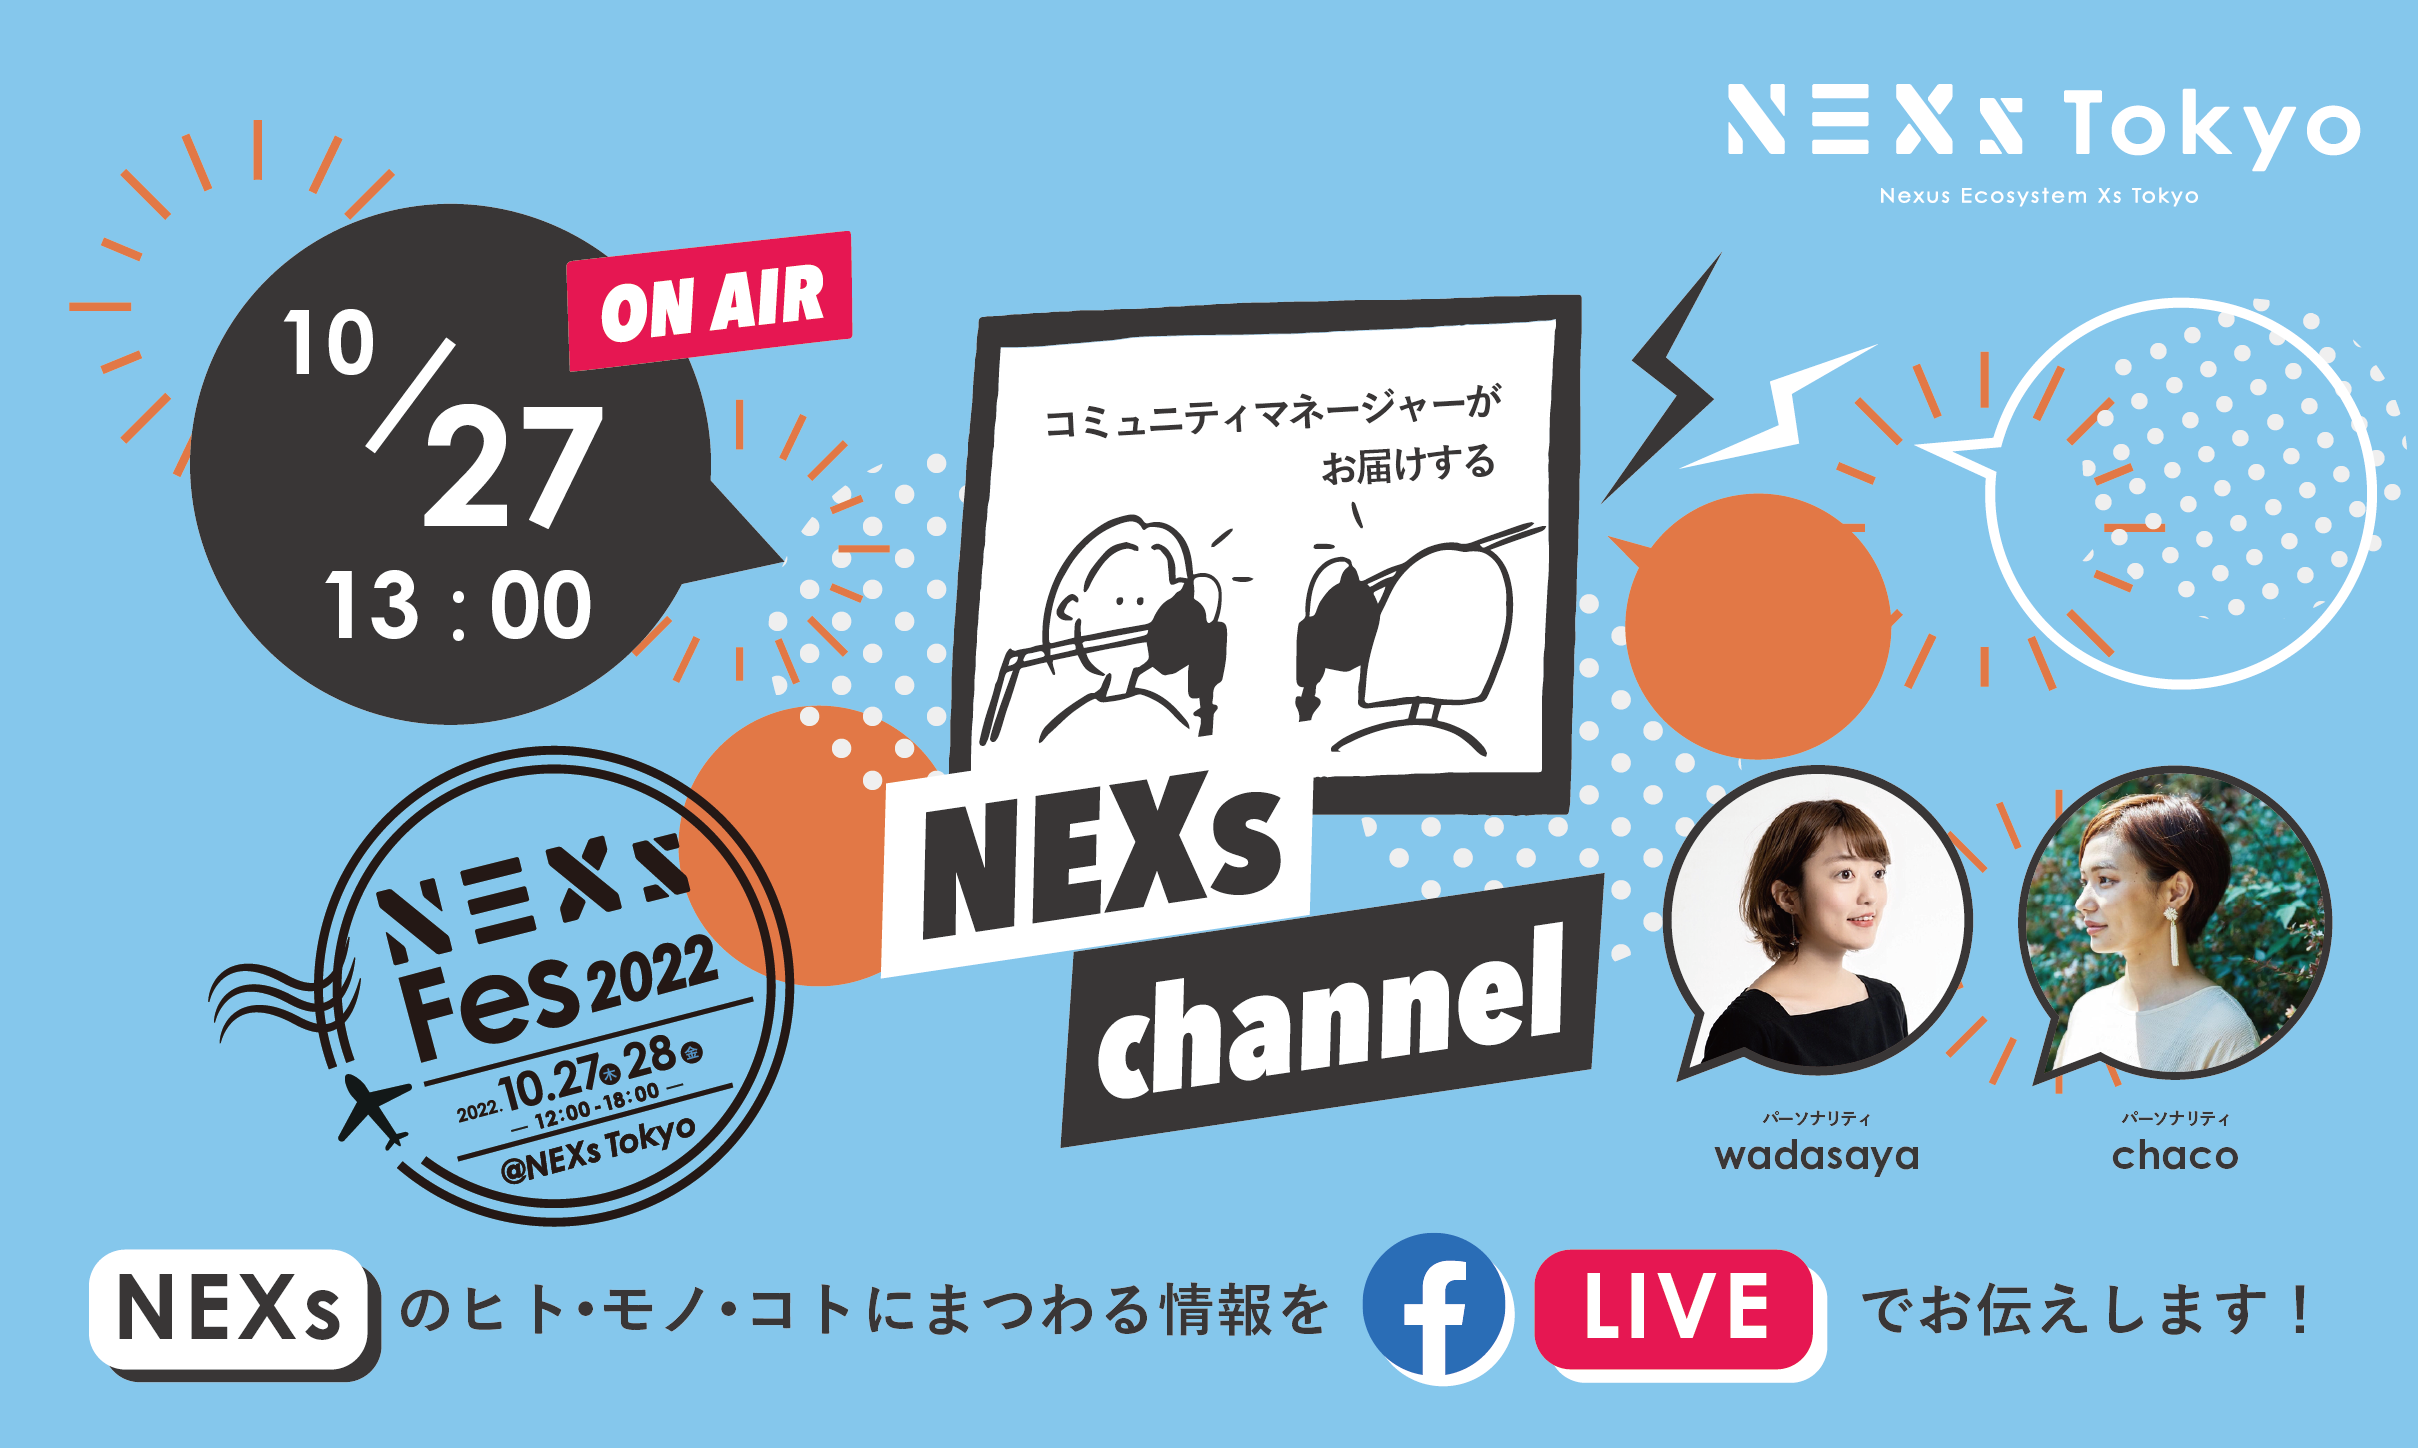 NEXs channel #22 -NEXs Tokyoのヒト・モノ・コトを特設ラジオブースから生放送でお届け！-